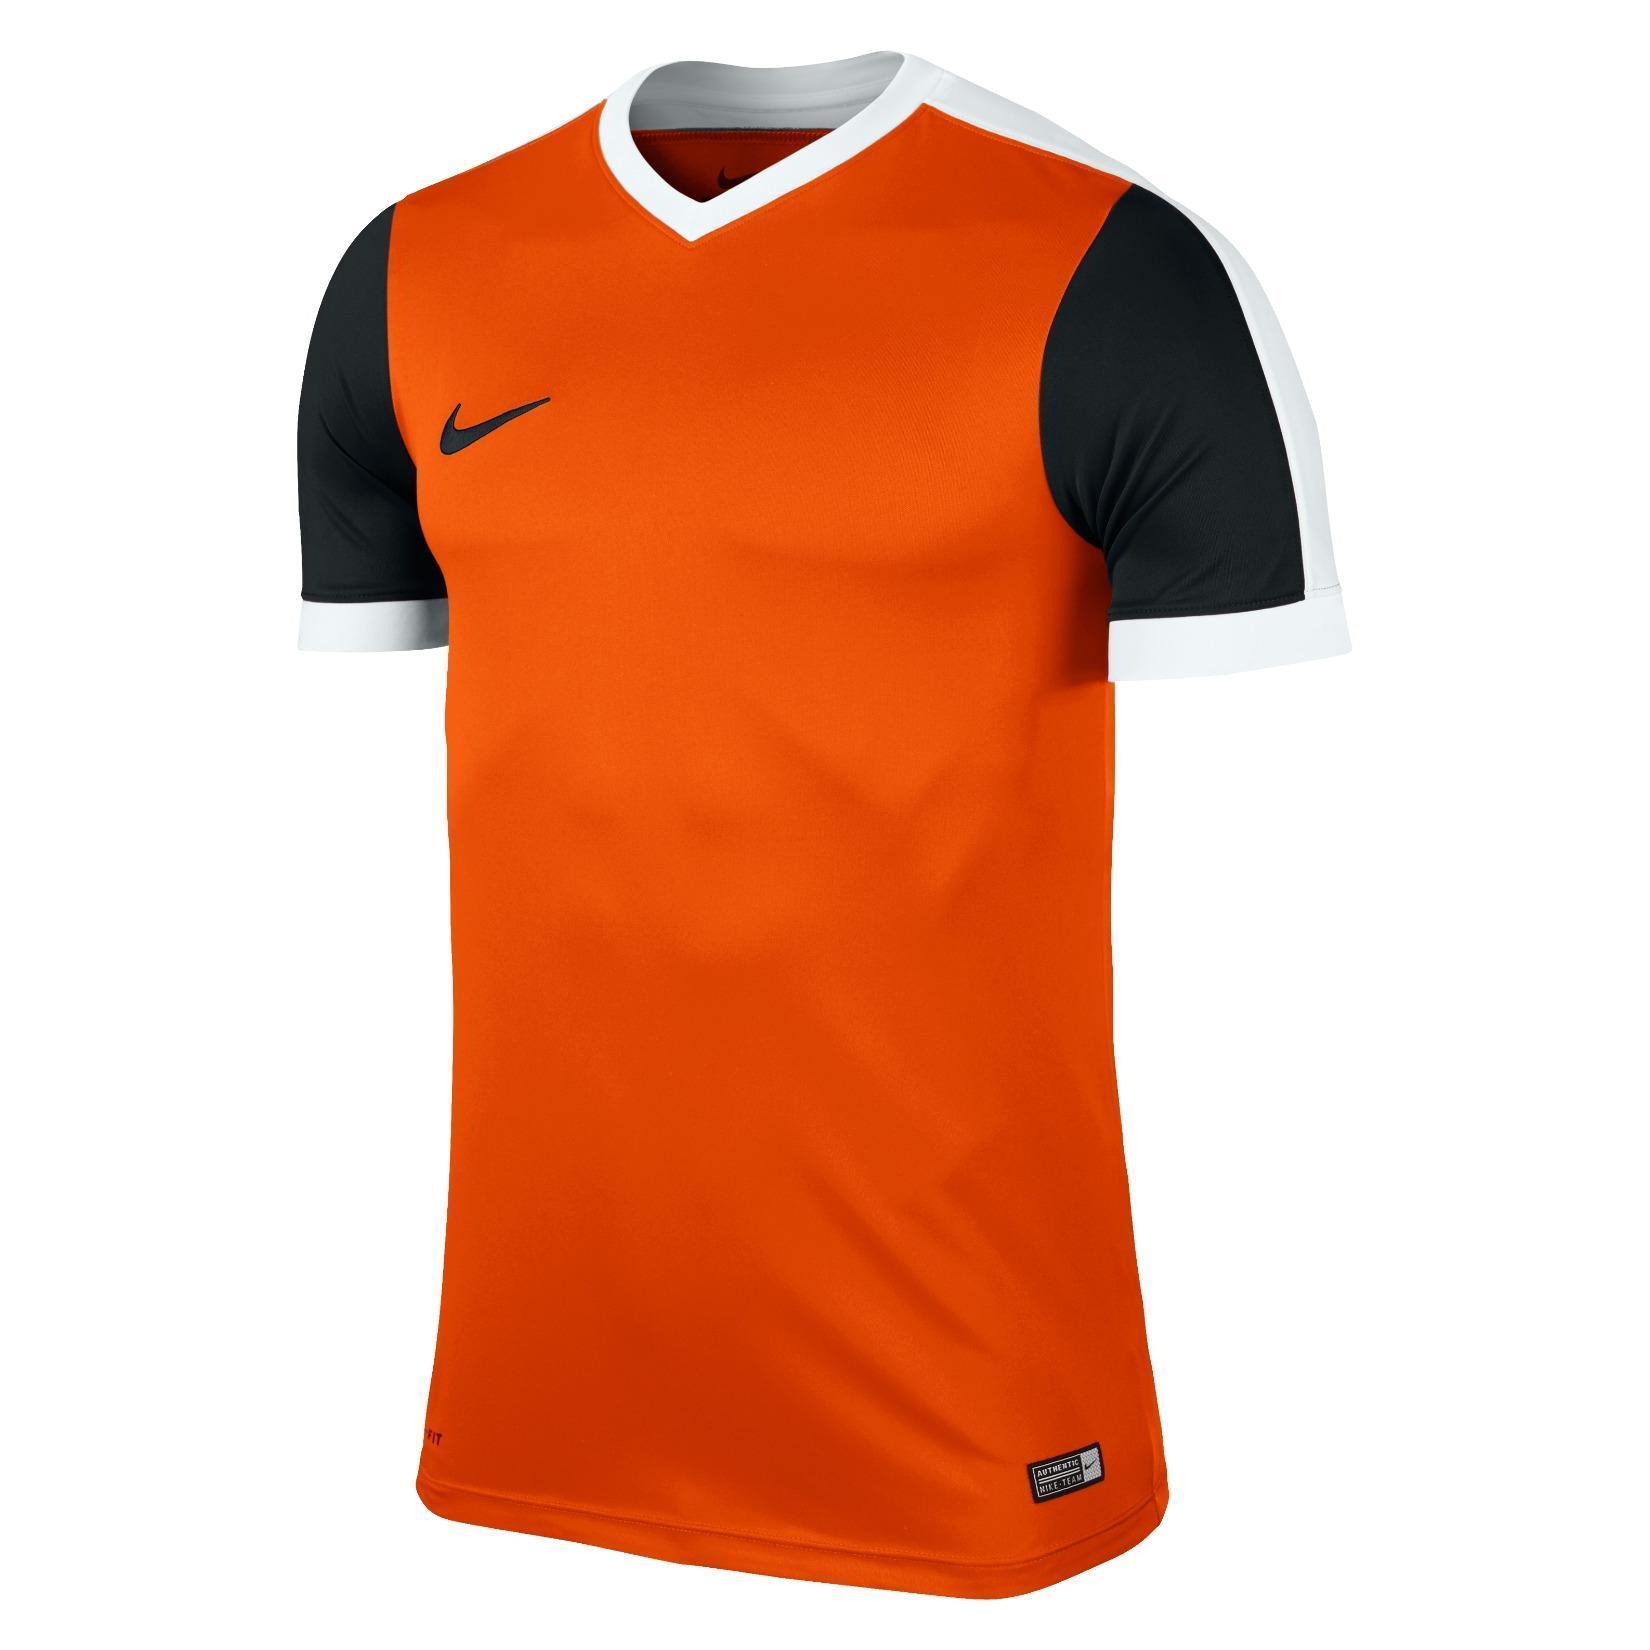 orange black and white jersey